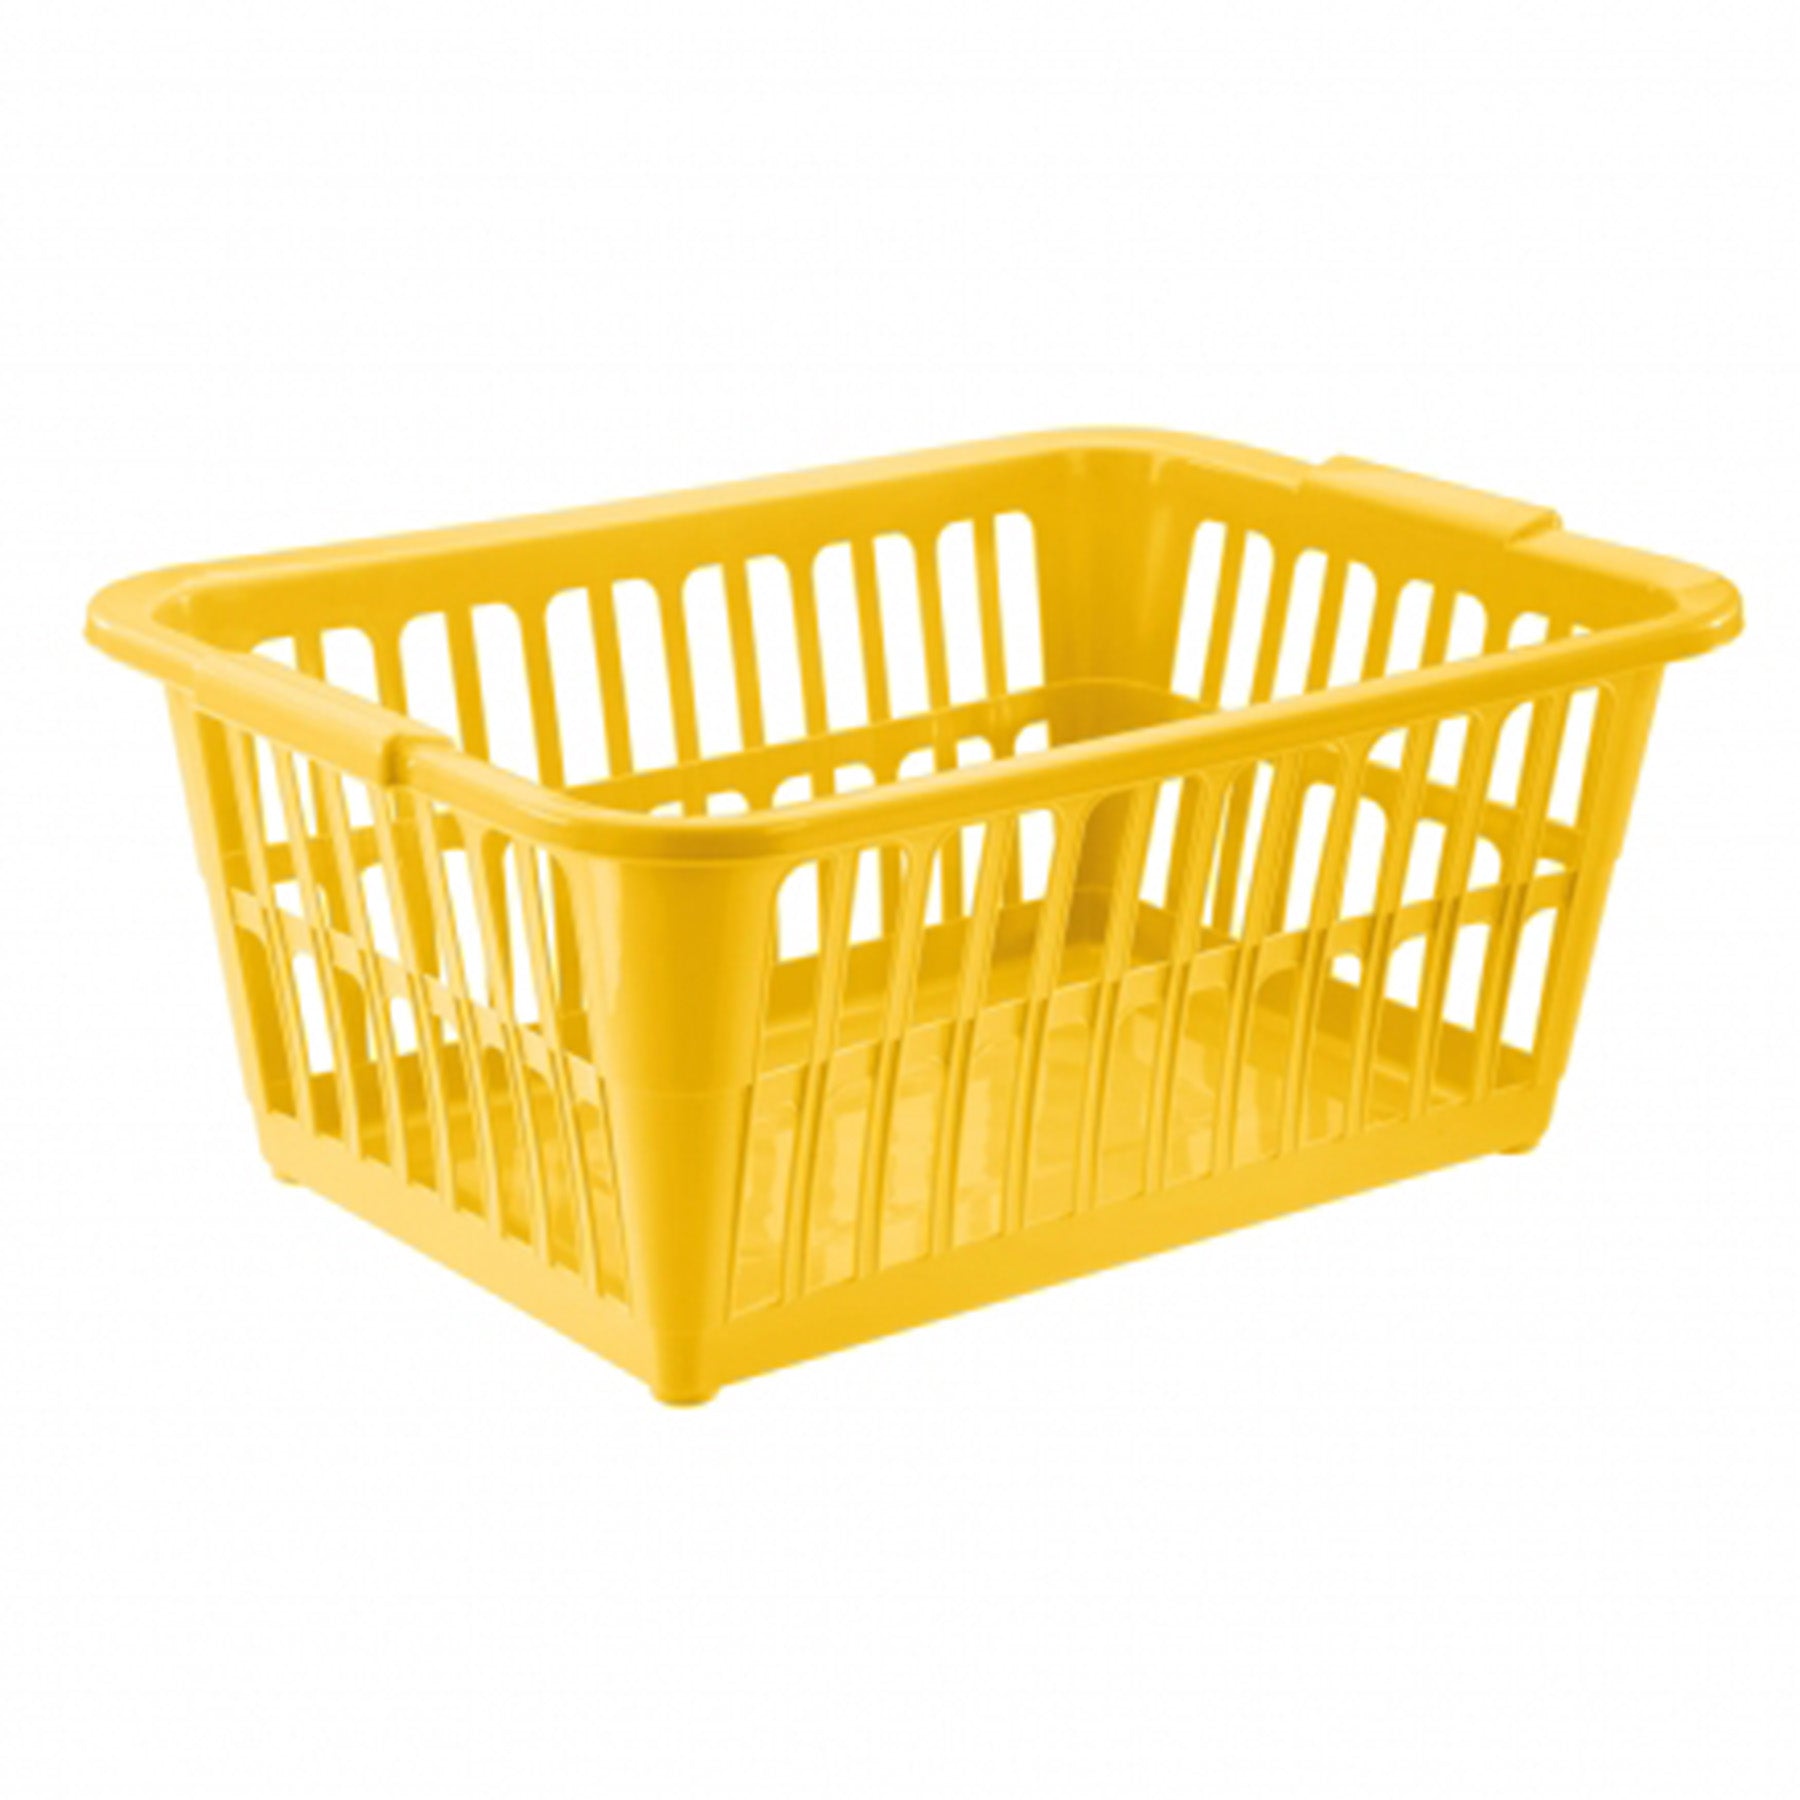 Laundry basket Capacity: 35 Liters